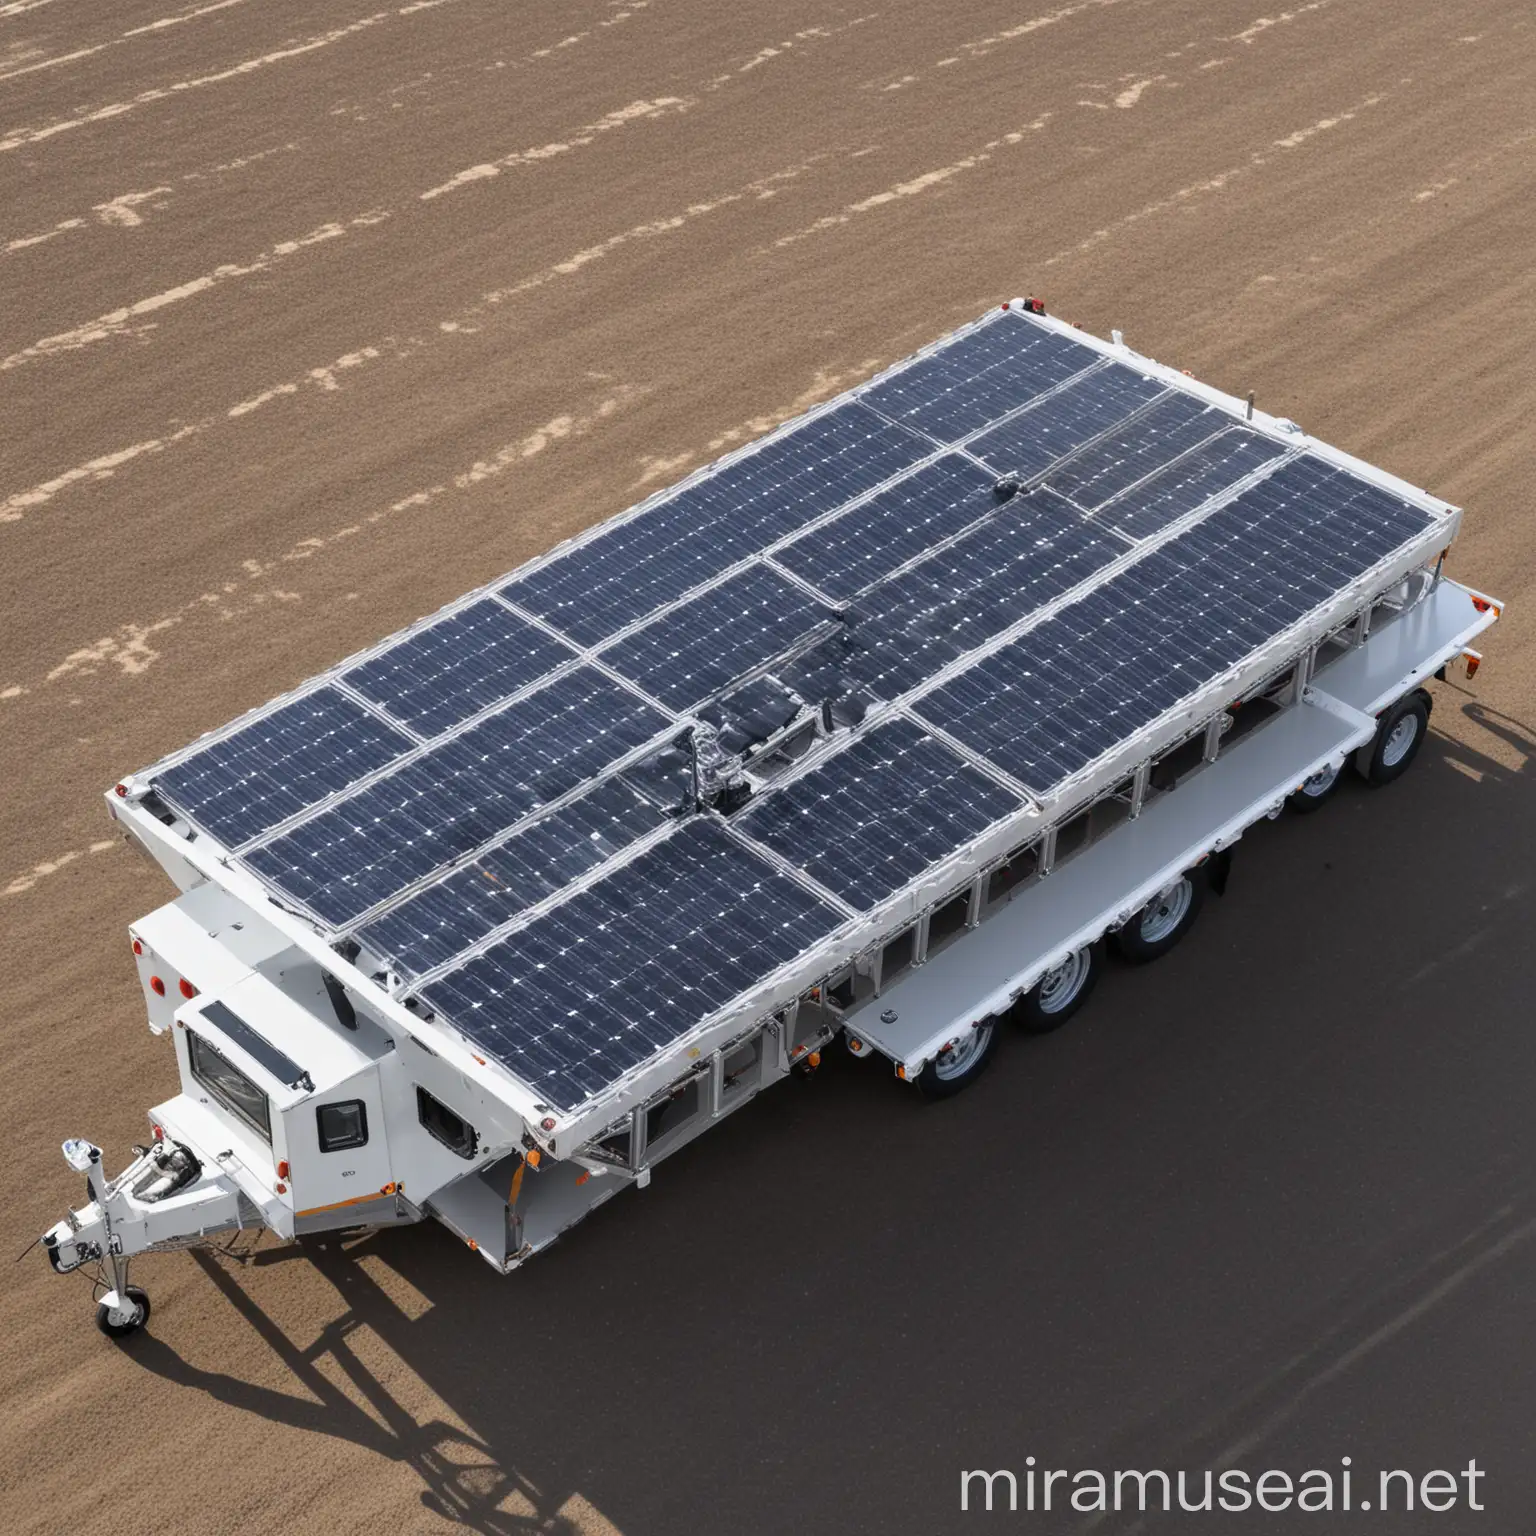 Solar Panel Trailer EcoFriendly Transport and Power Generation